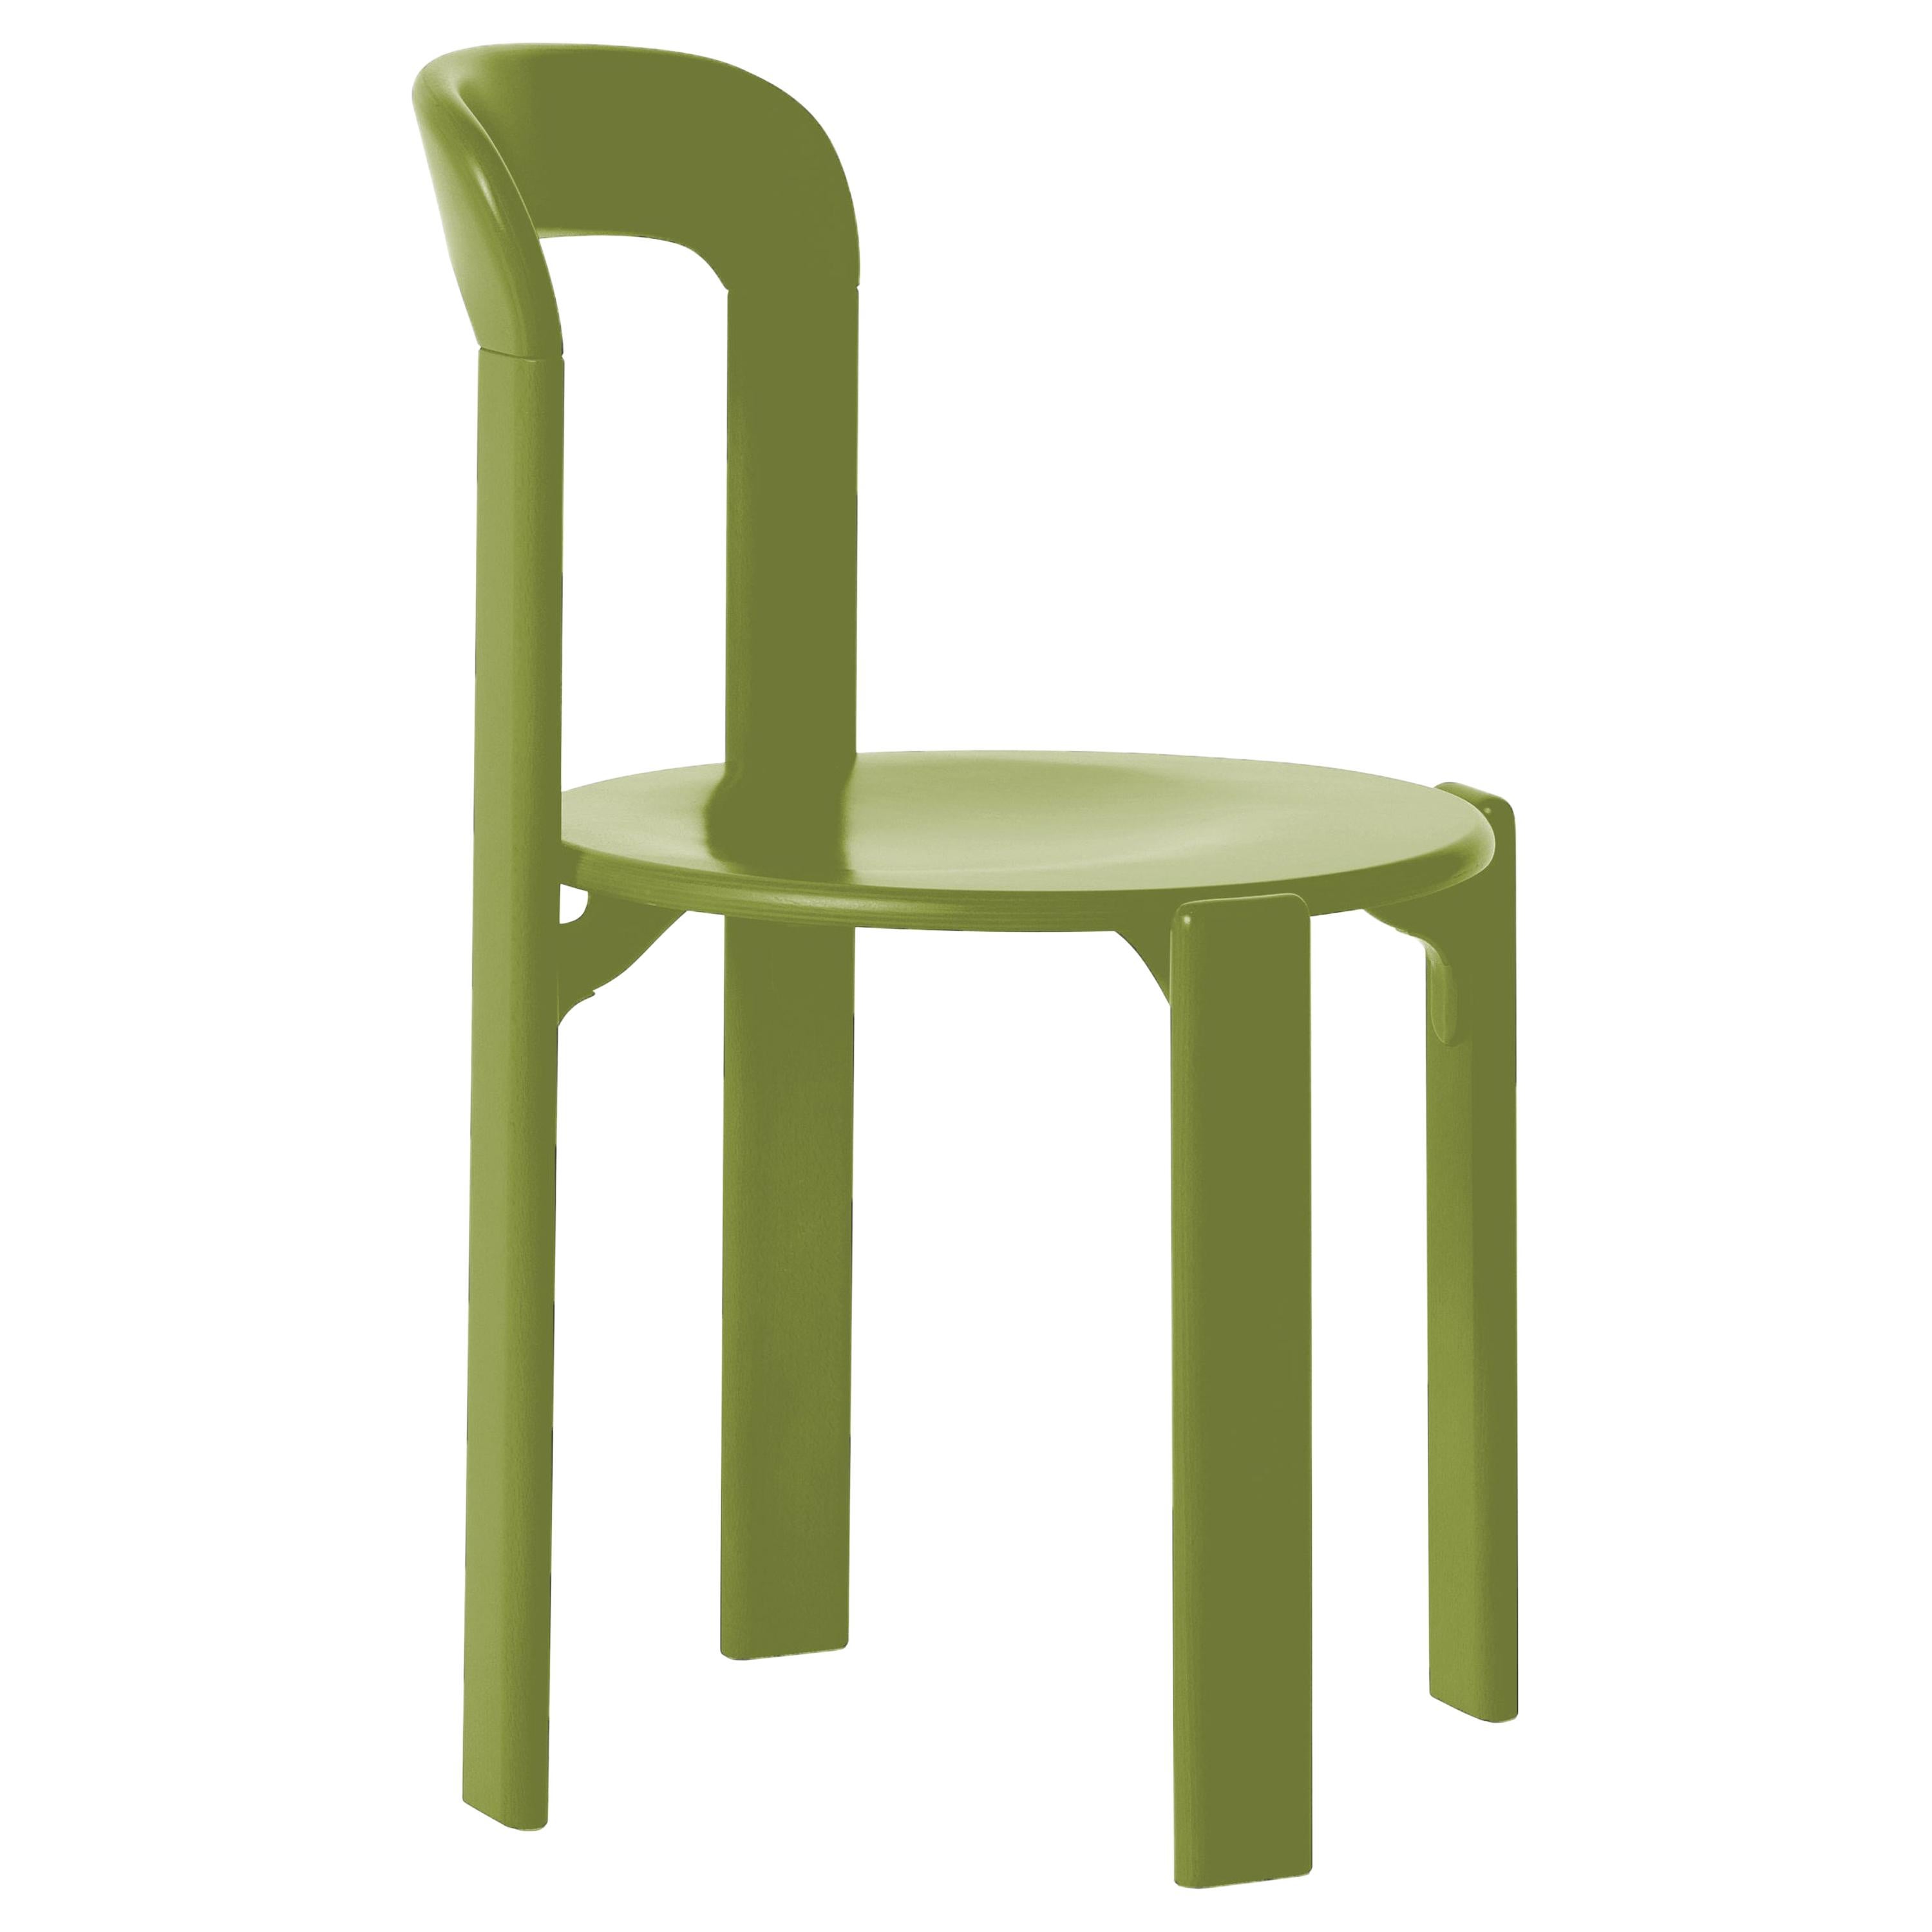 Mid-Century Modern, Rey Arik Levy SA1 Green Chair by Bruno Rey, Design 1971